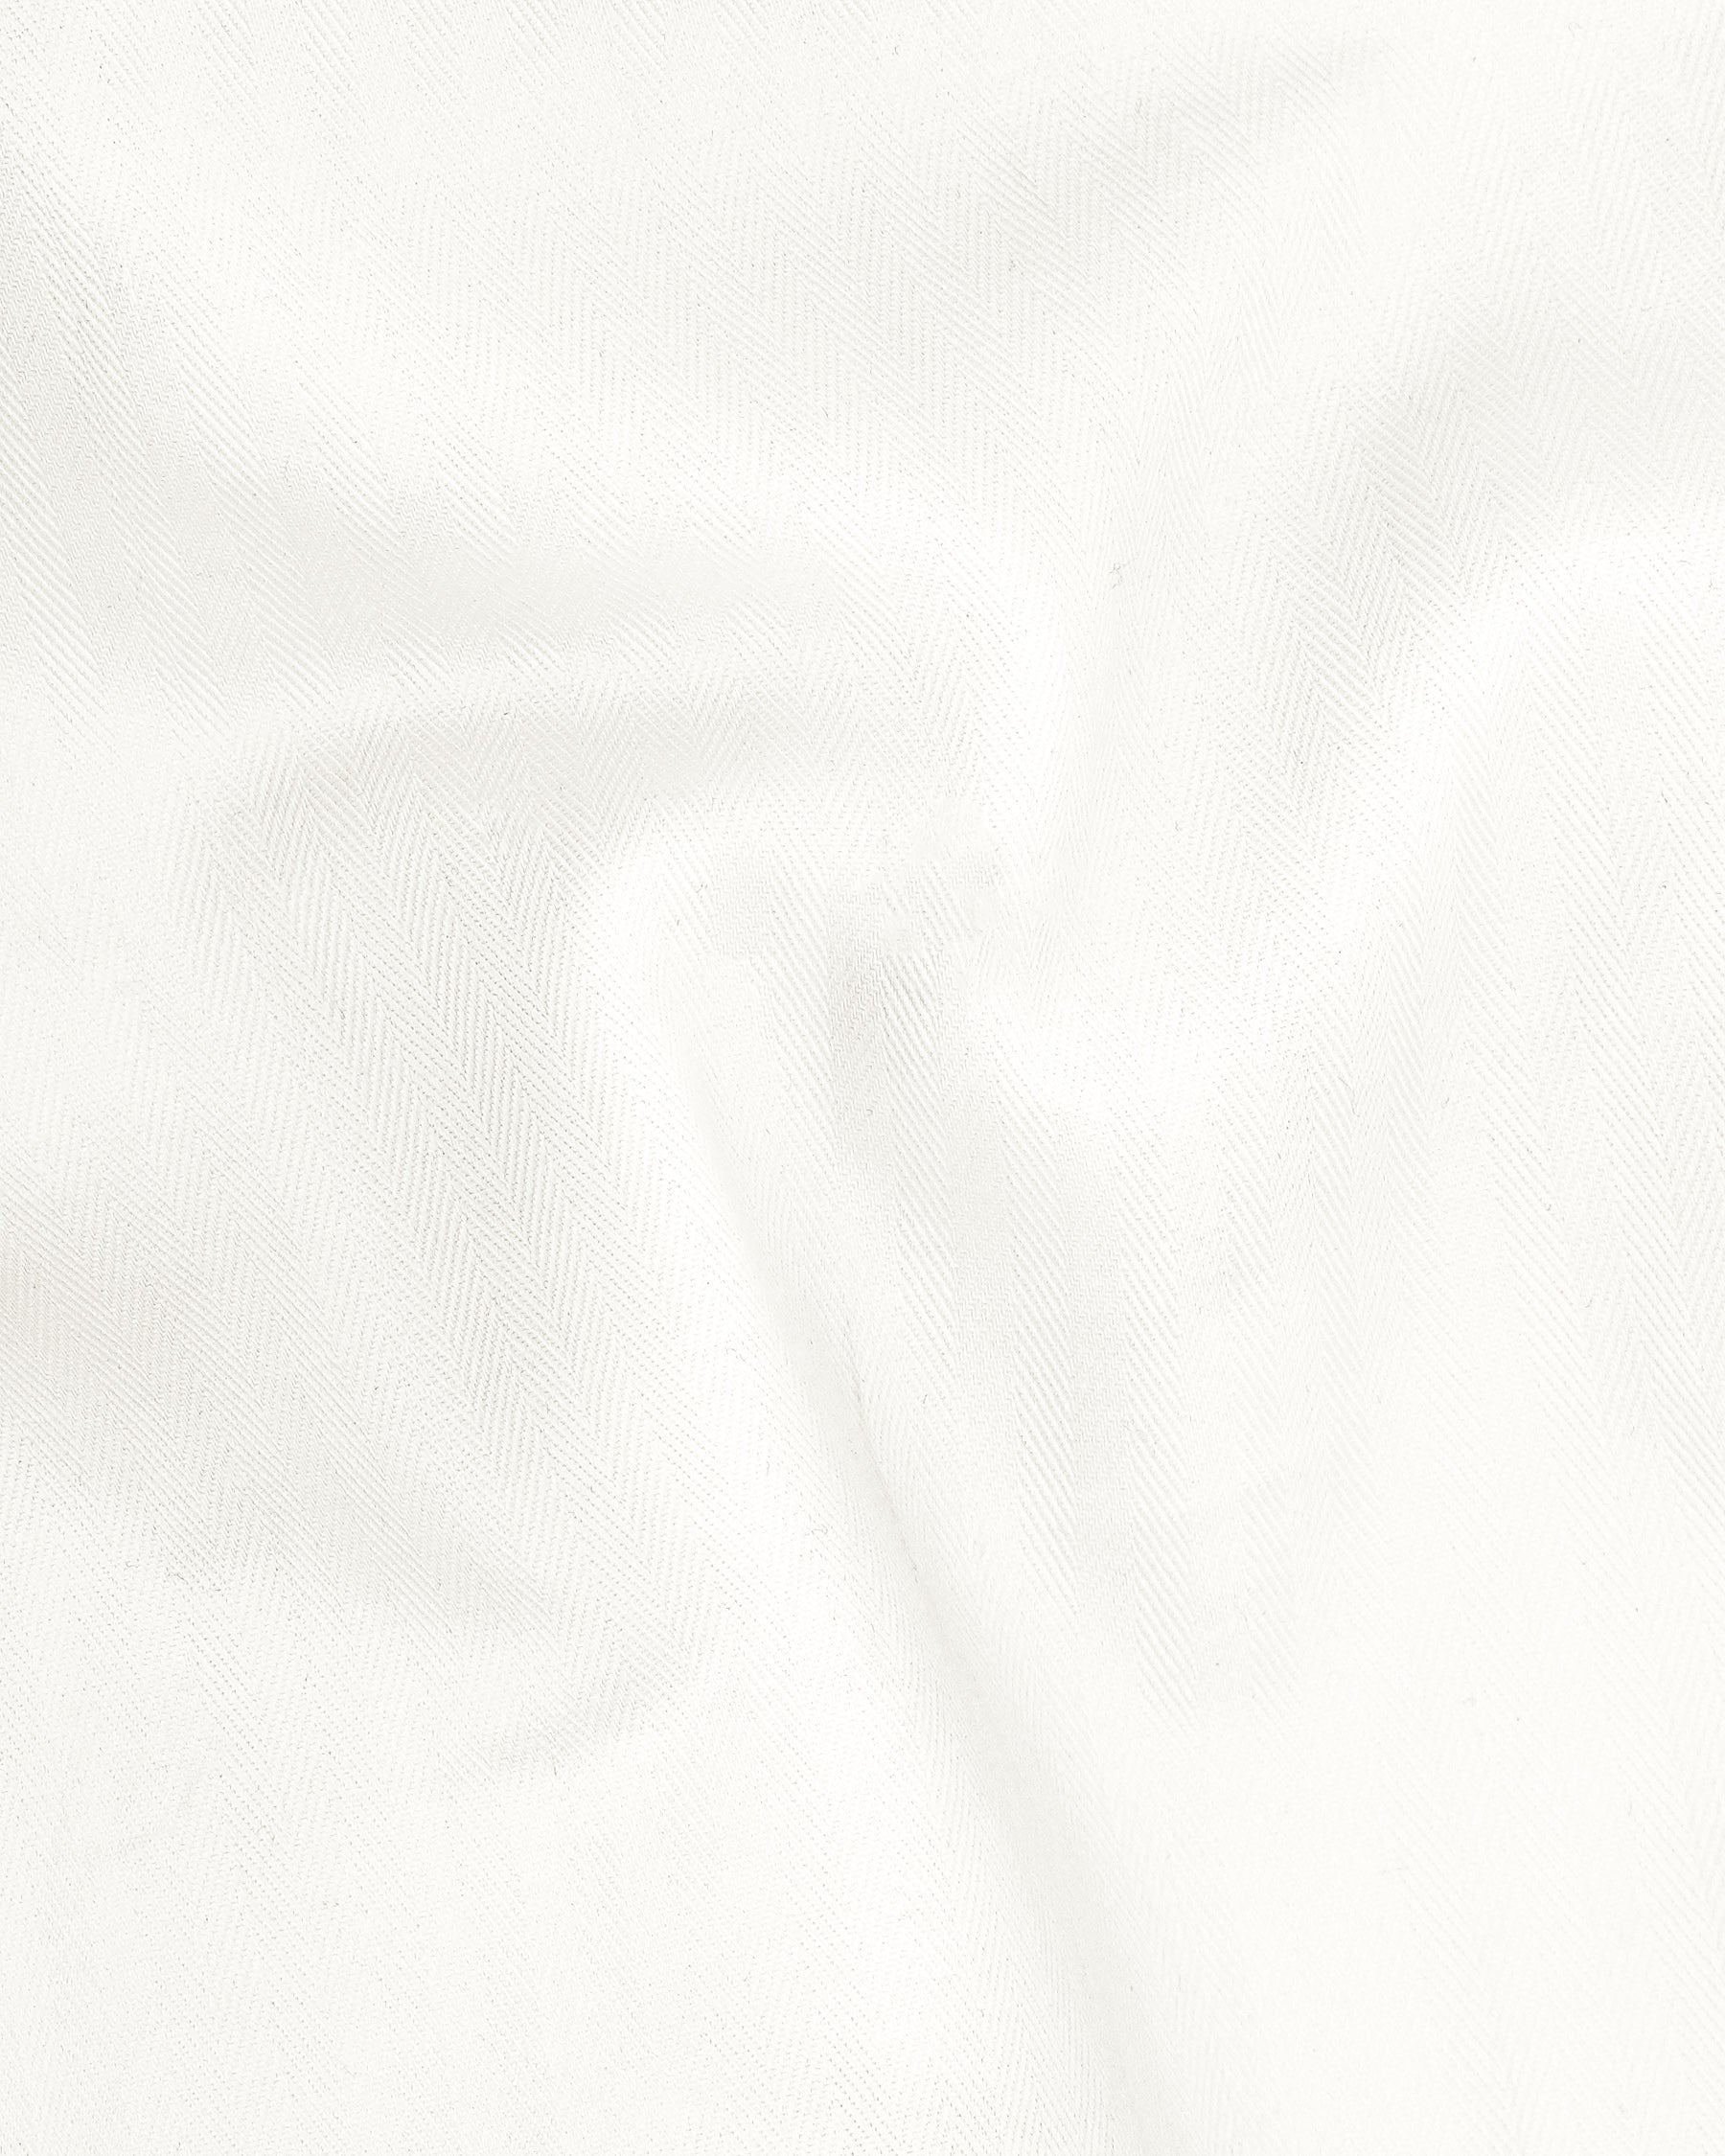 Bright White Cross-Placket Bandhgala Premium Cotton Suit